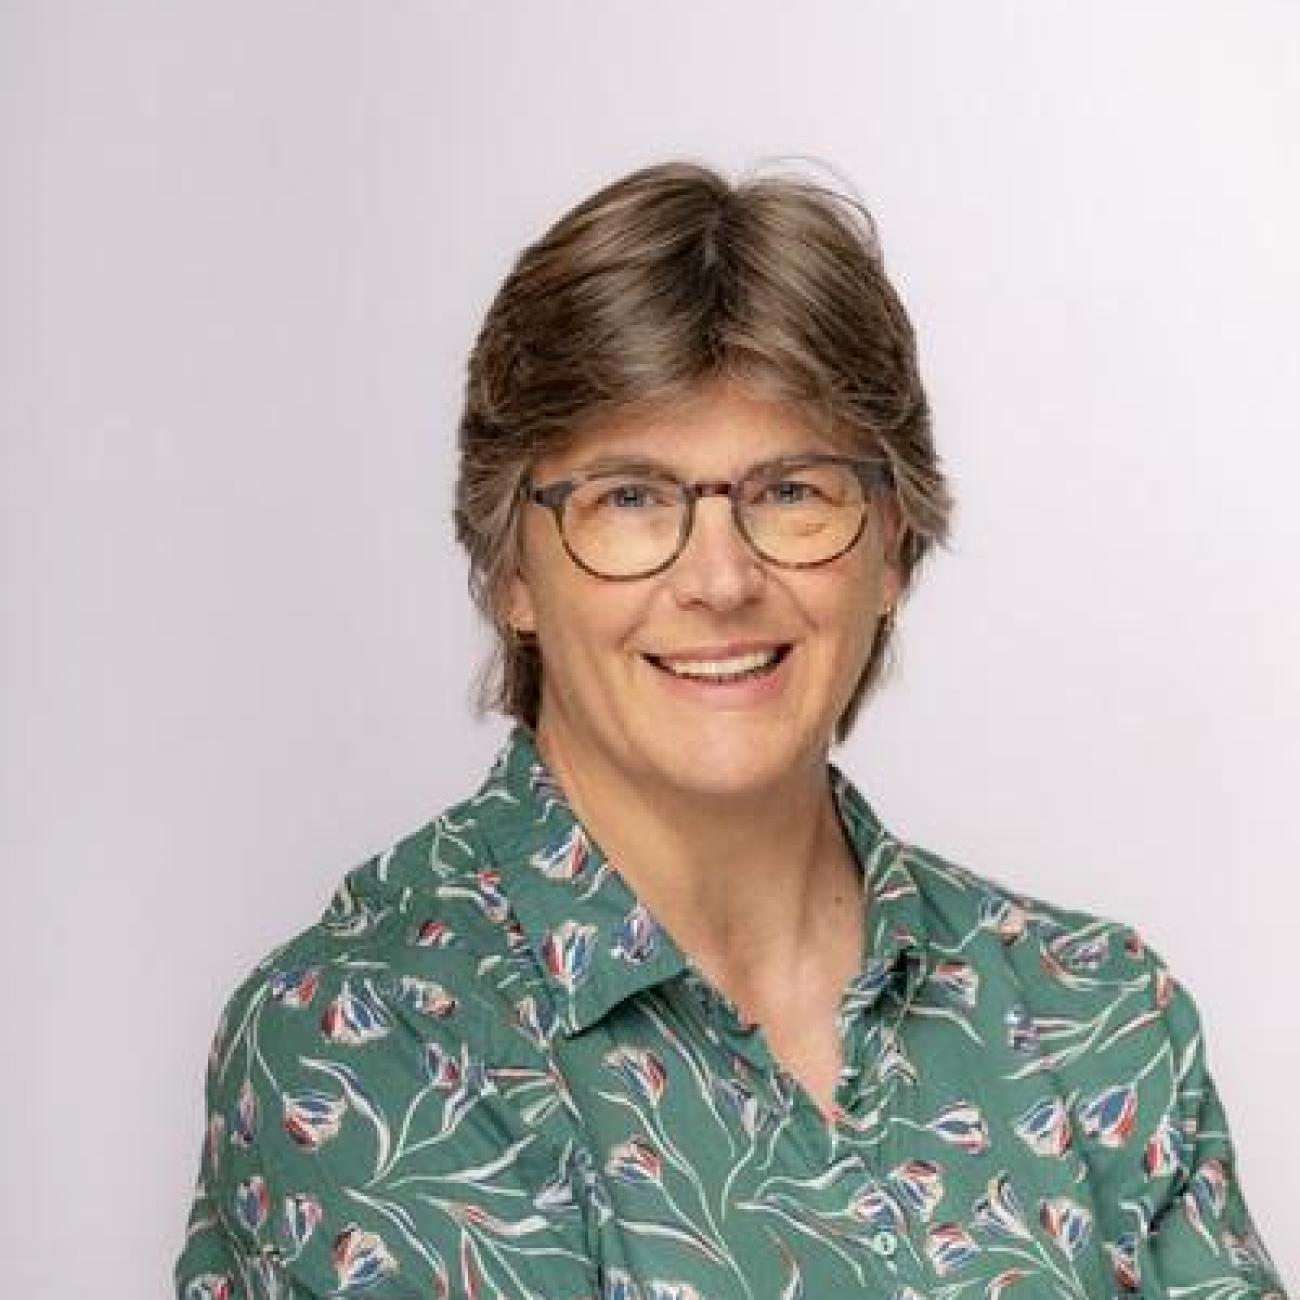 Doctor Cathy Lucas